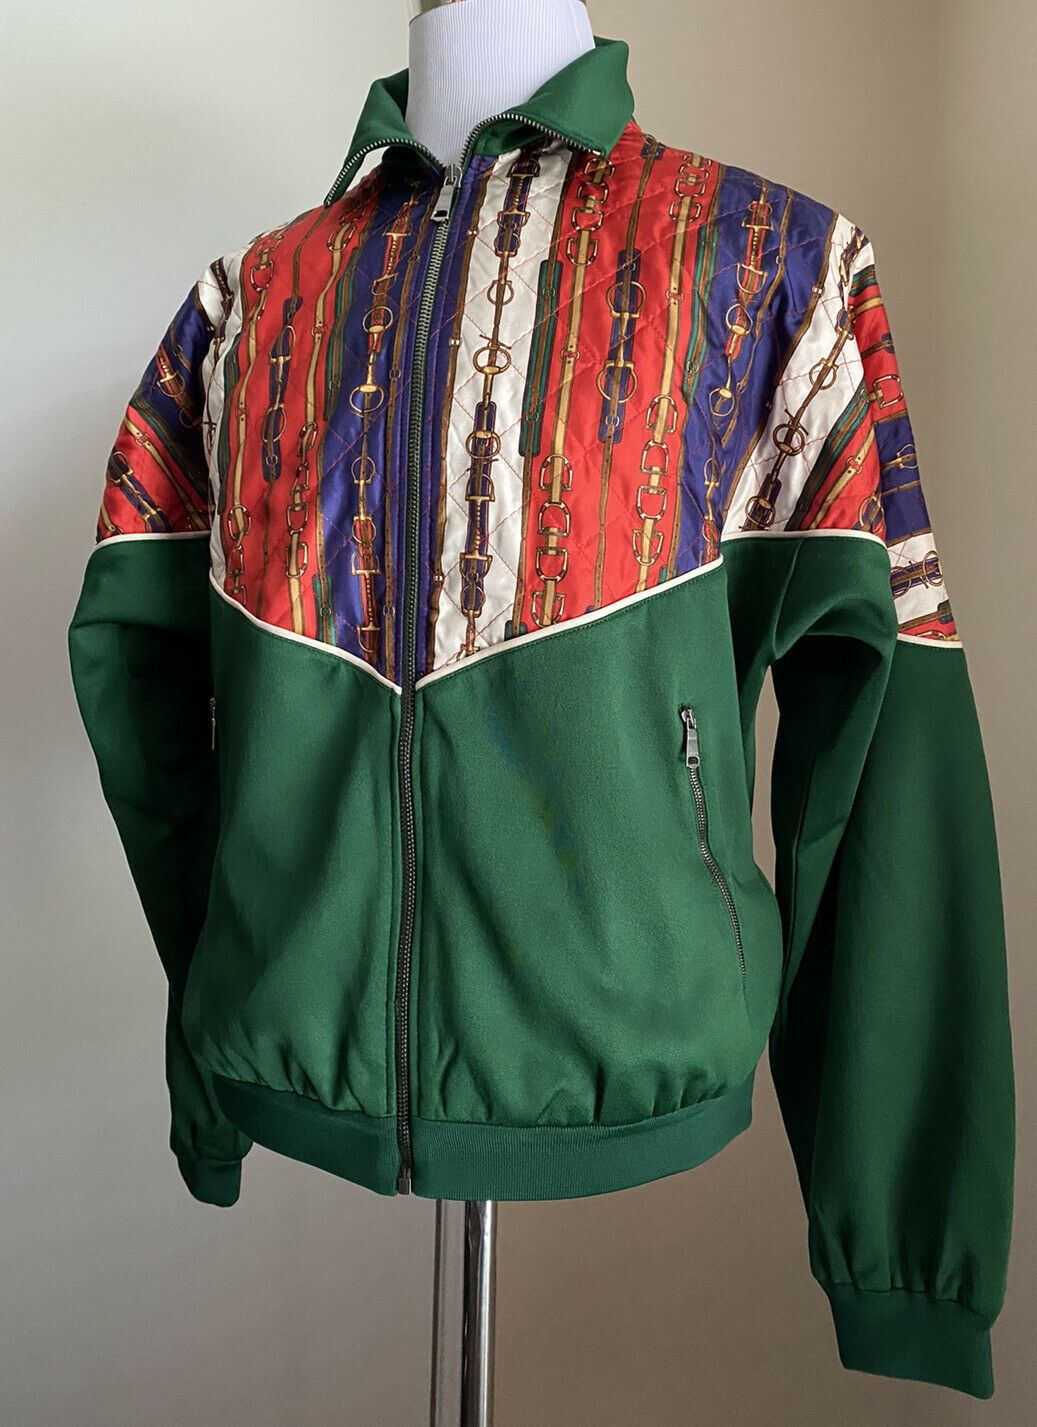 Neu mit Etikett: 2980 $ Gucci Herren-Trainingsjacke, Grün/Mehrfarbig, Größe M, Italien